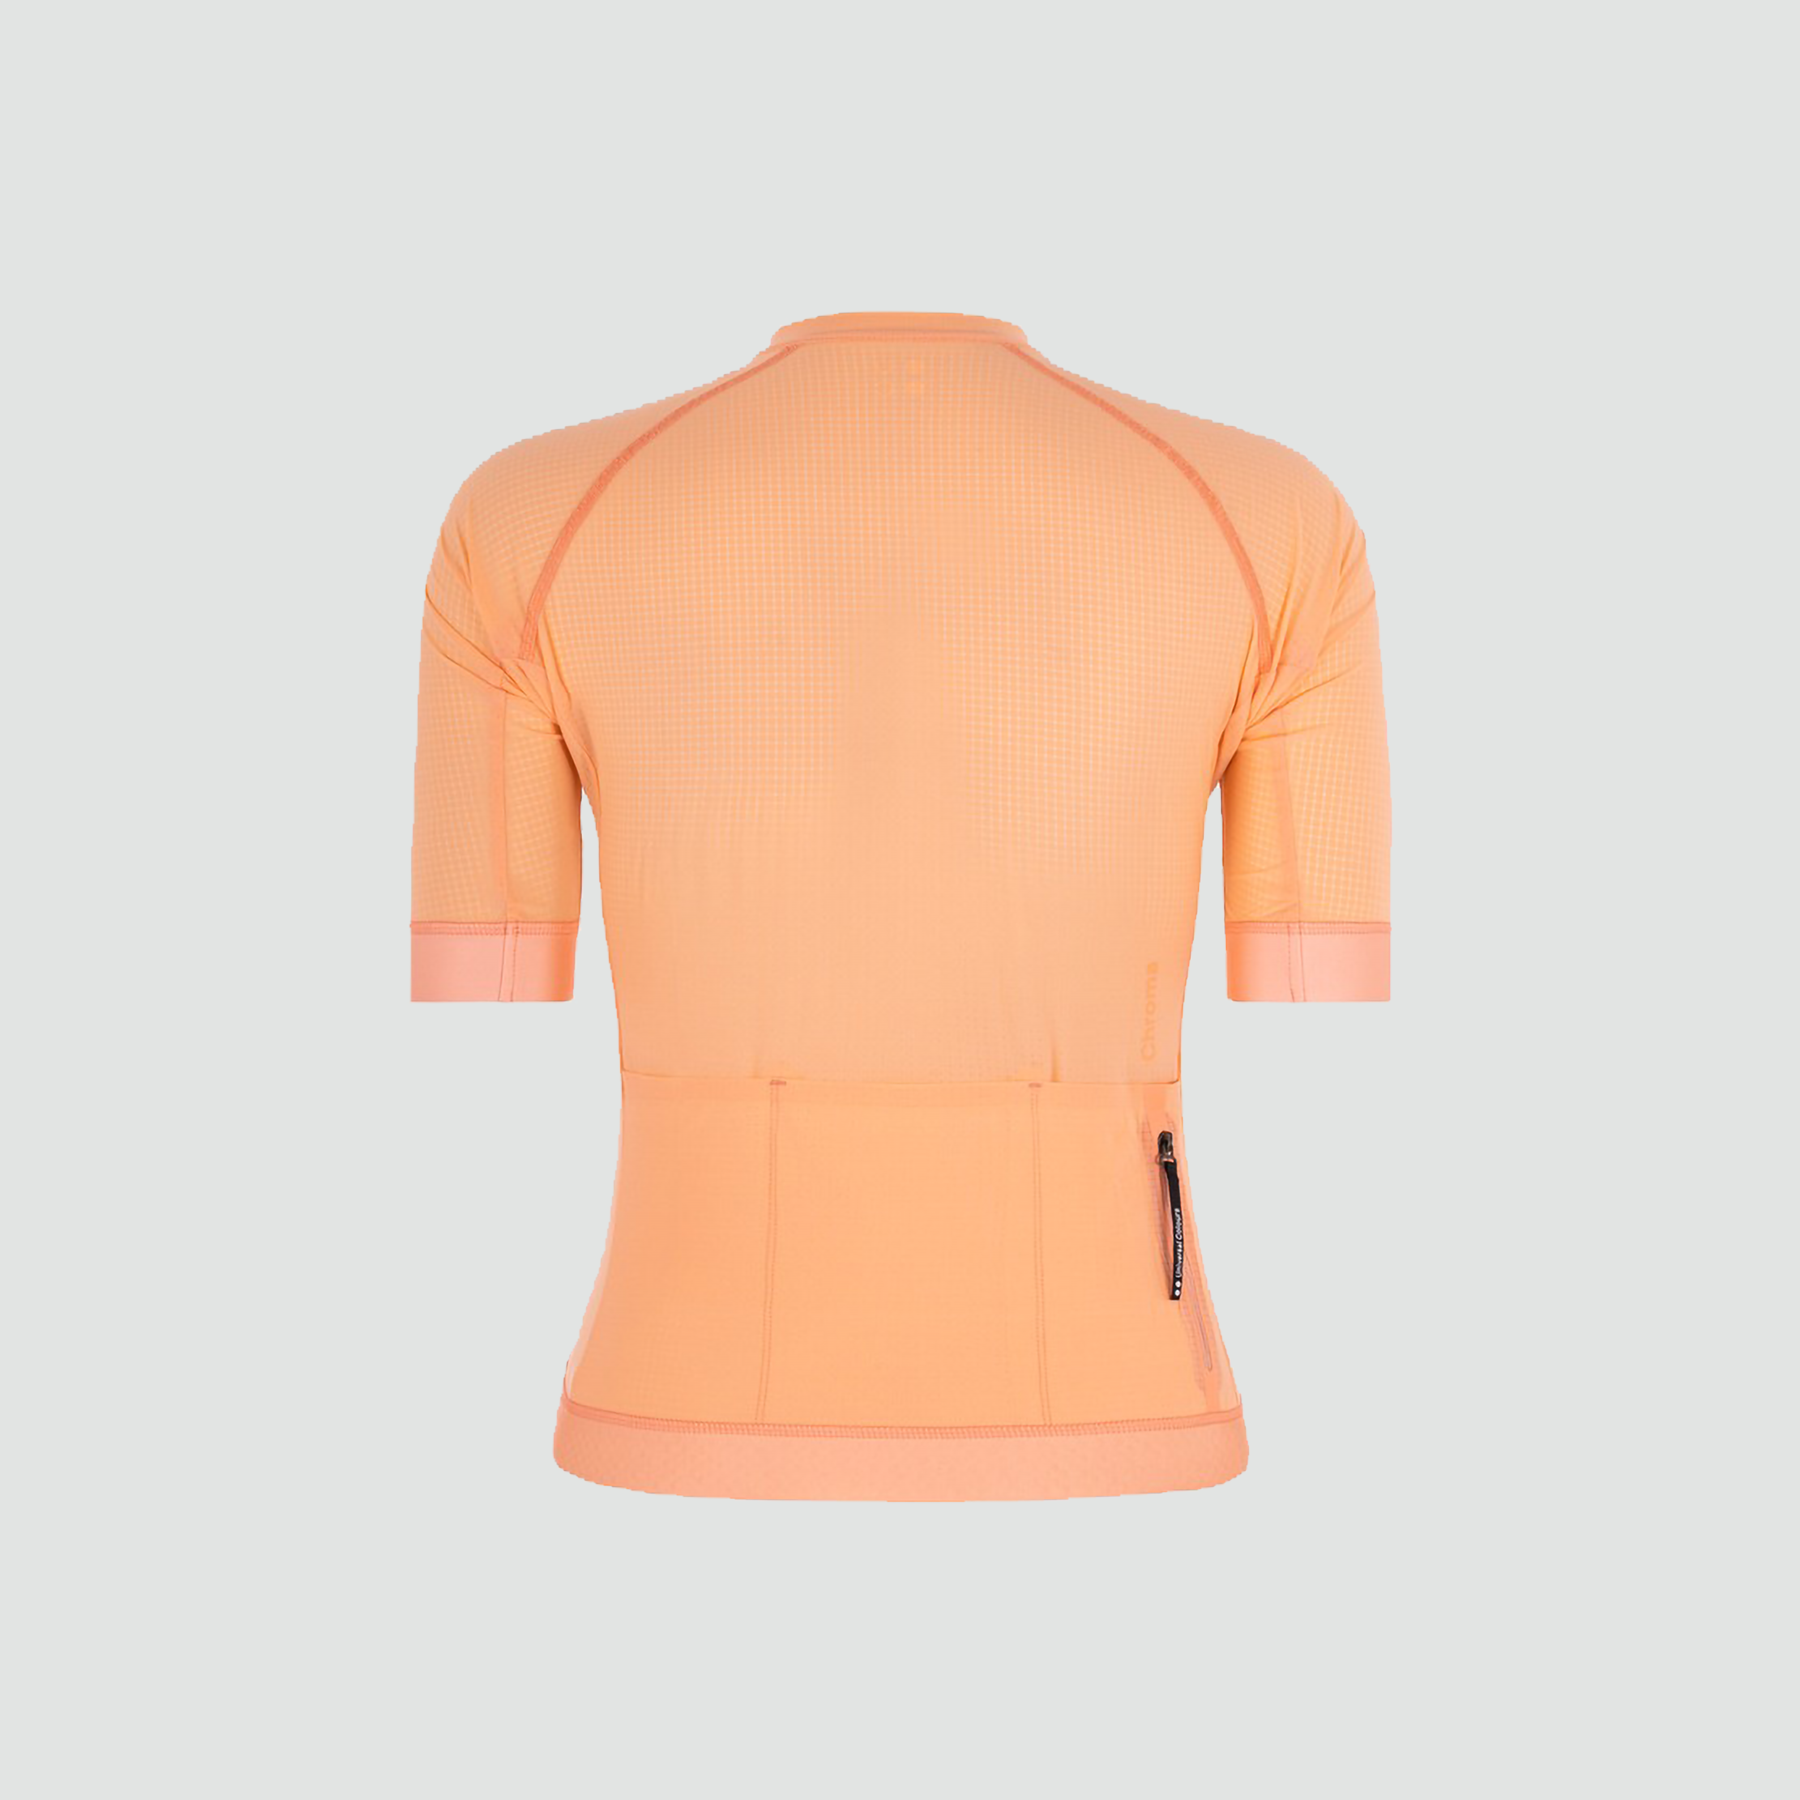 Chroma Womens Short Sleeve Jersey - Cantaloupe Pink